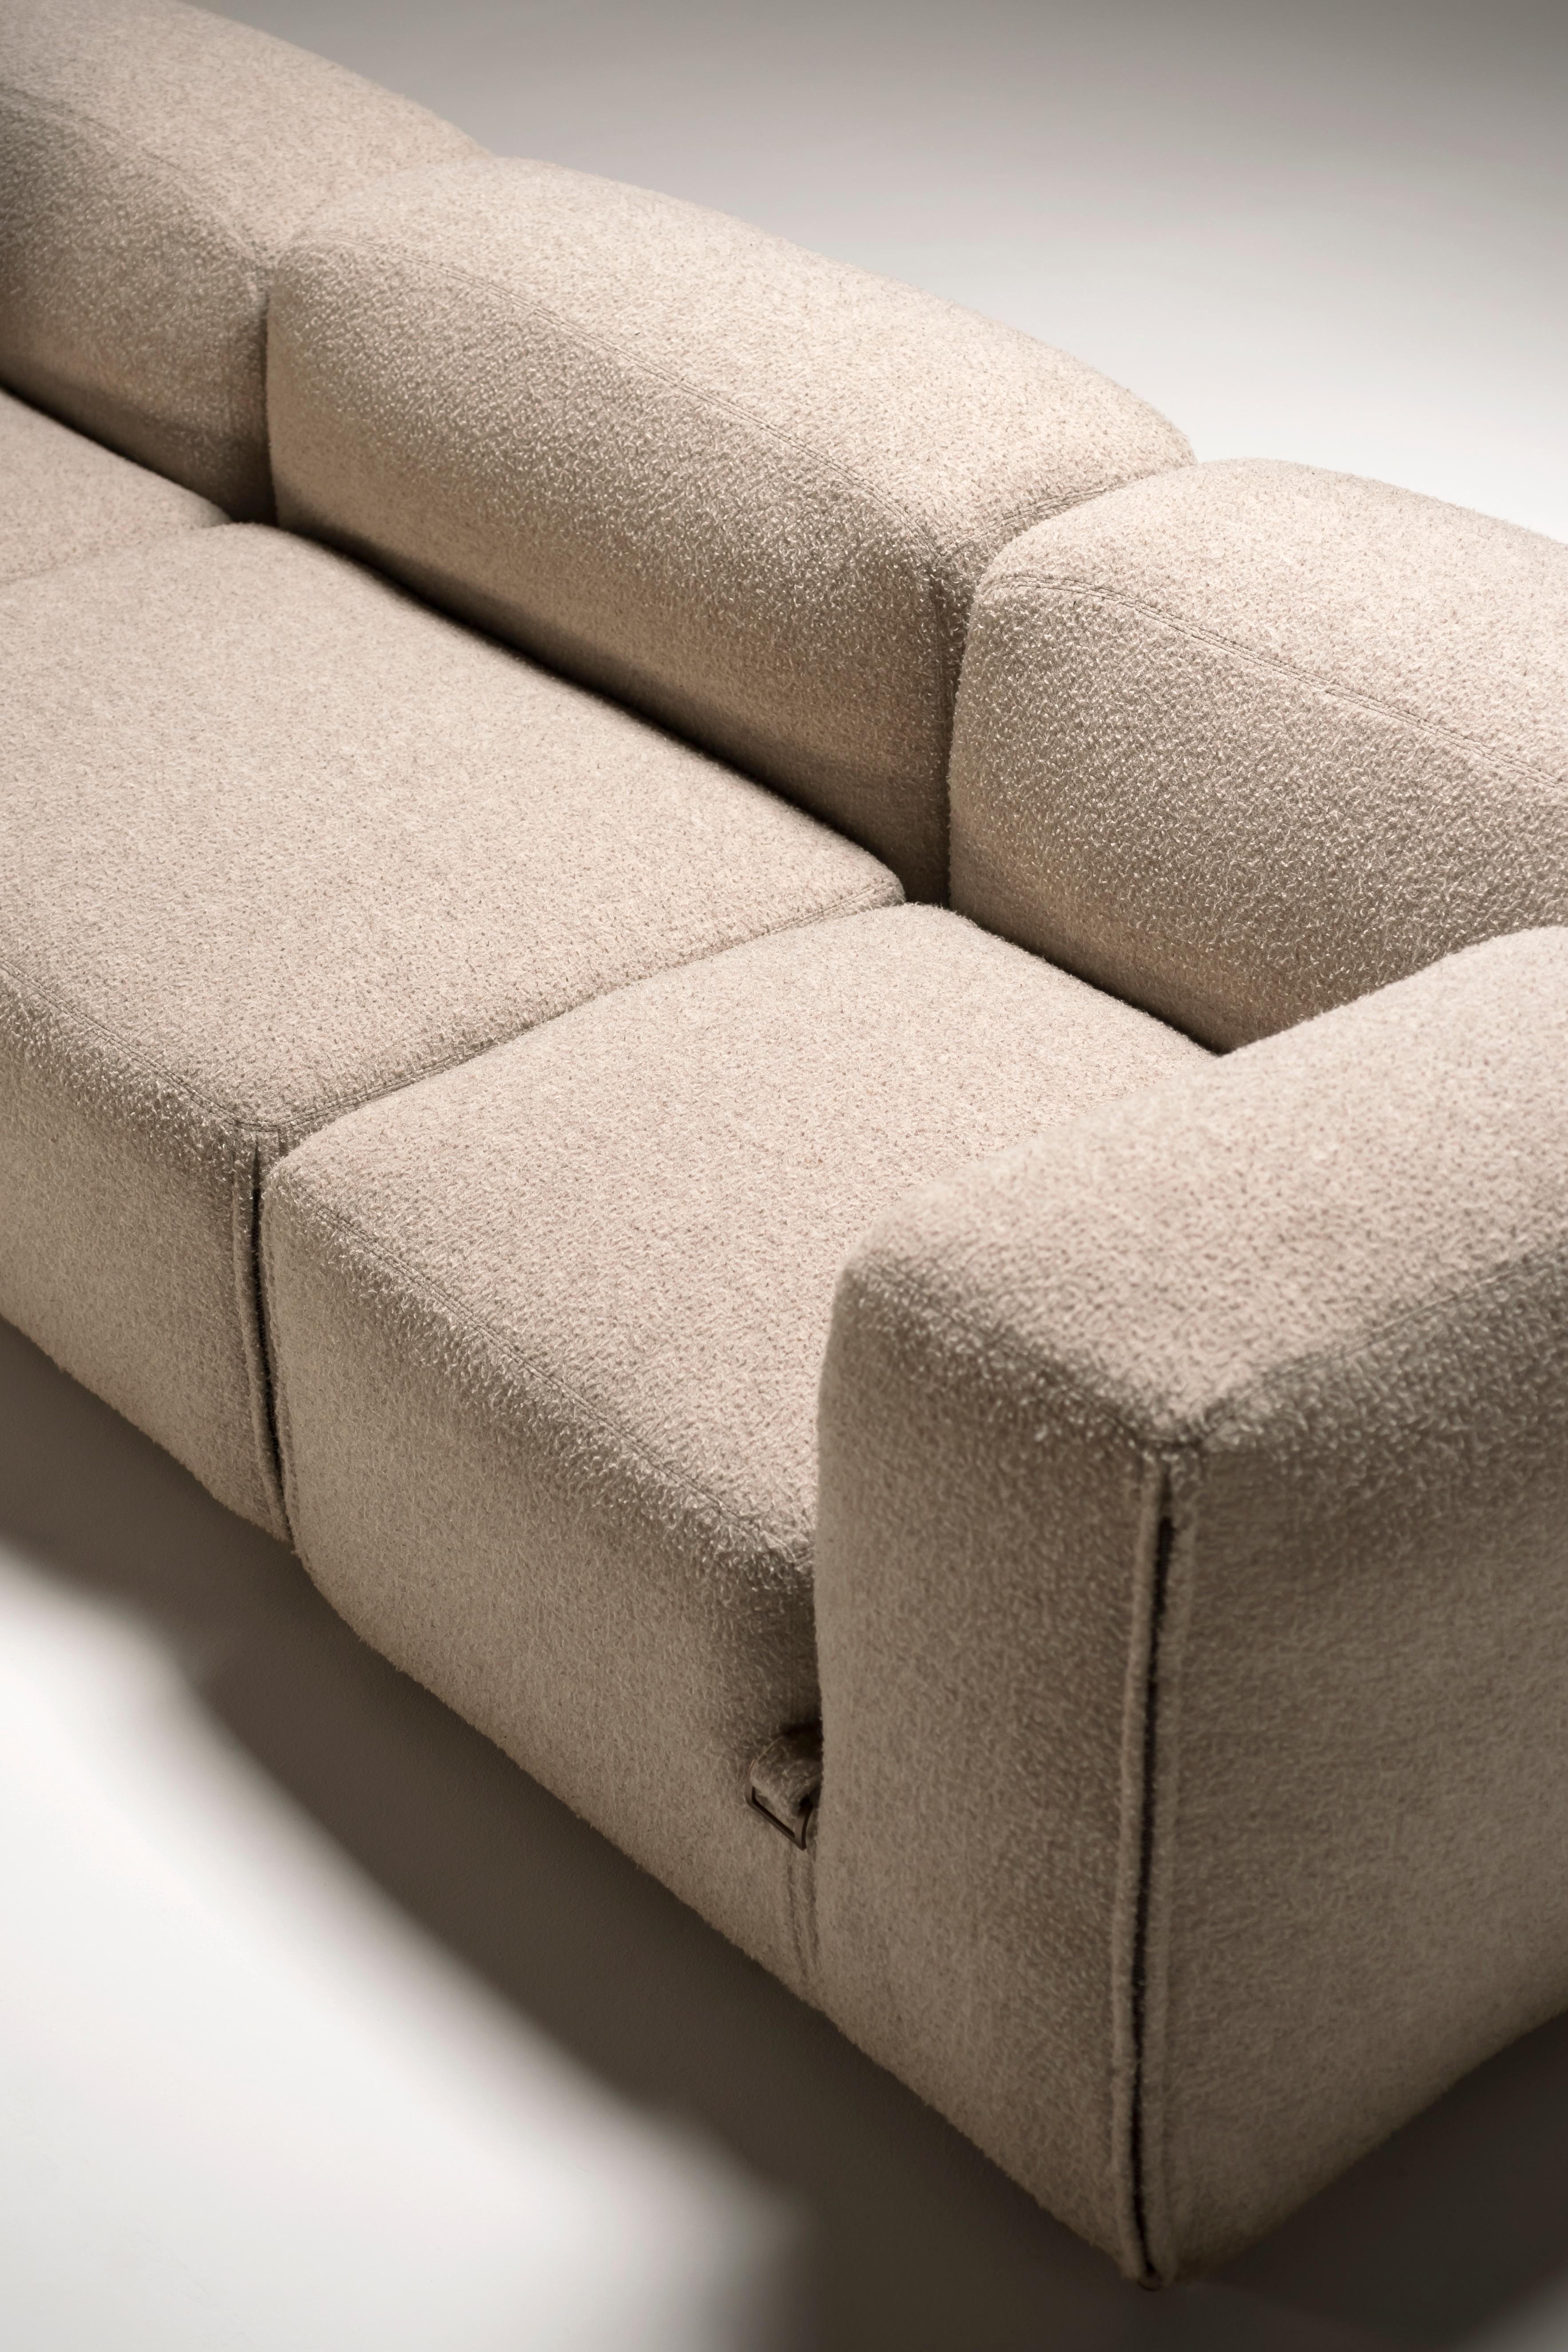 Modern Tacchini Le Mura Wool Modular Sofa designed by Mario Bellini